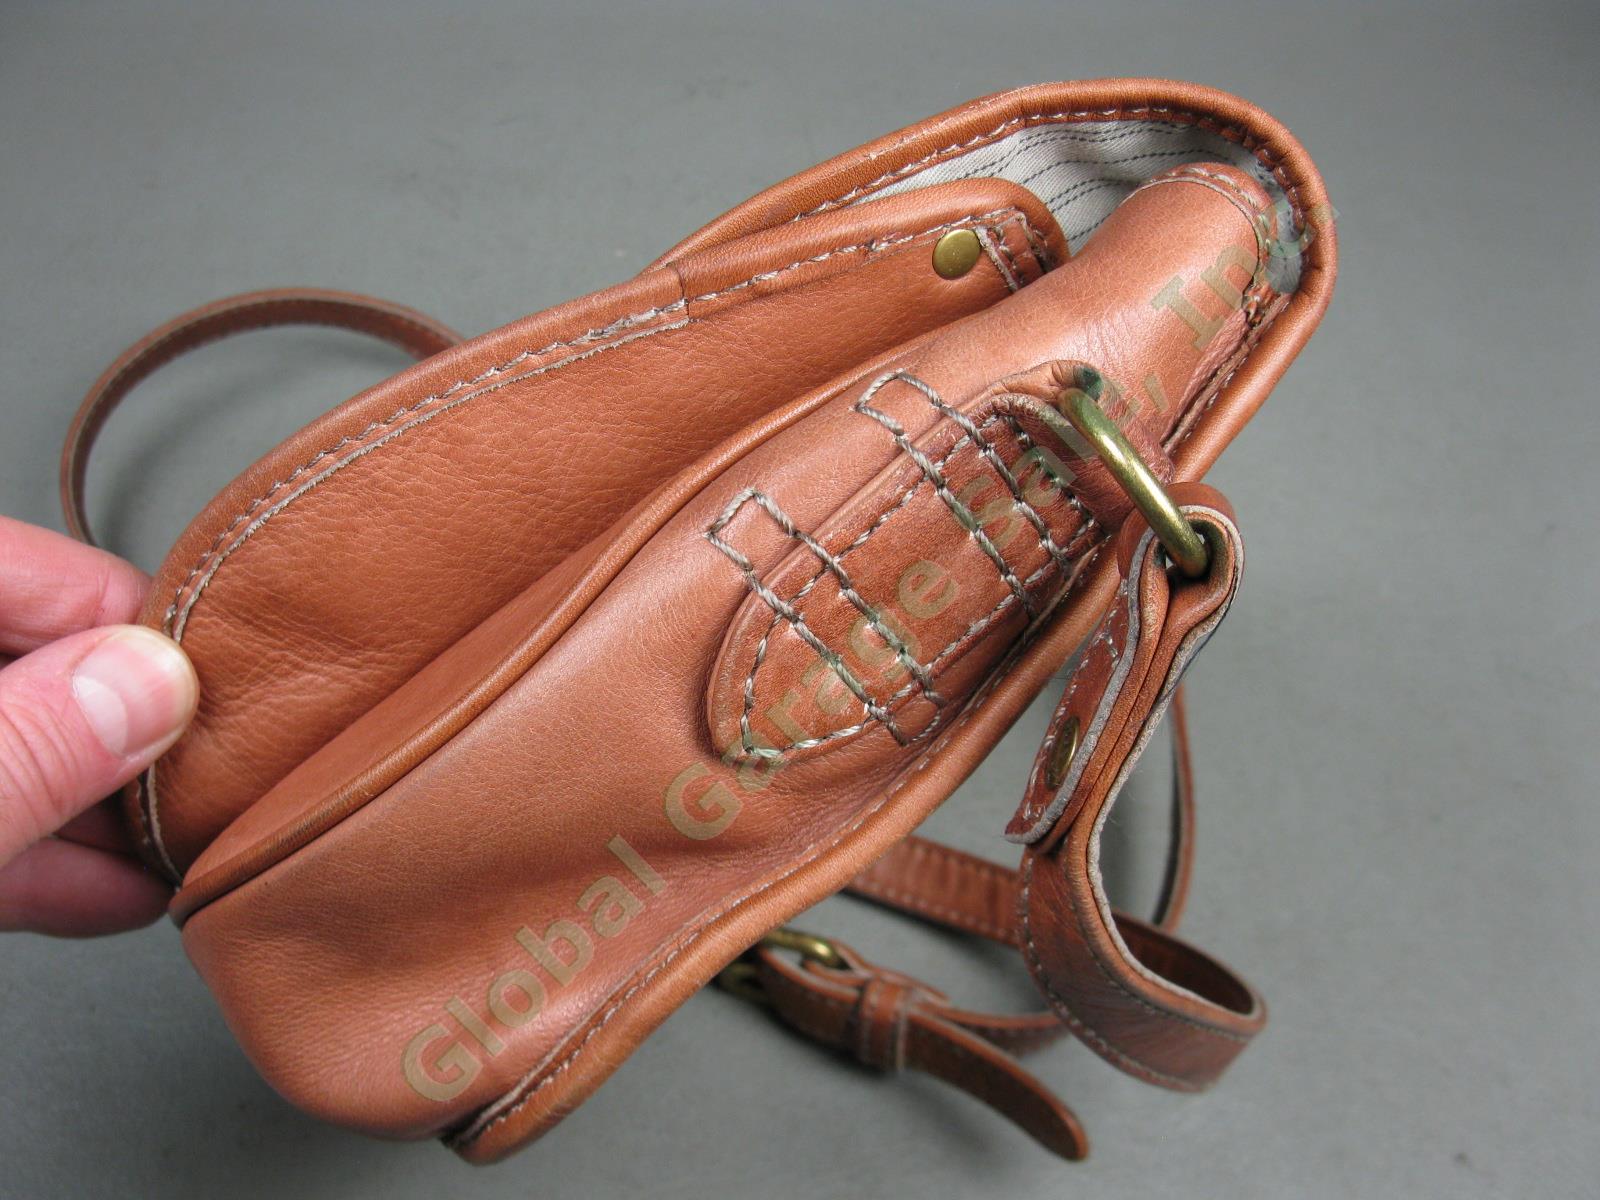 Frye Campus Saddle Cross Body Leather Handbag Clutch DB891 $298 Retail NORESERVE 3